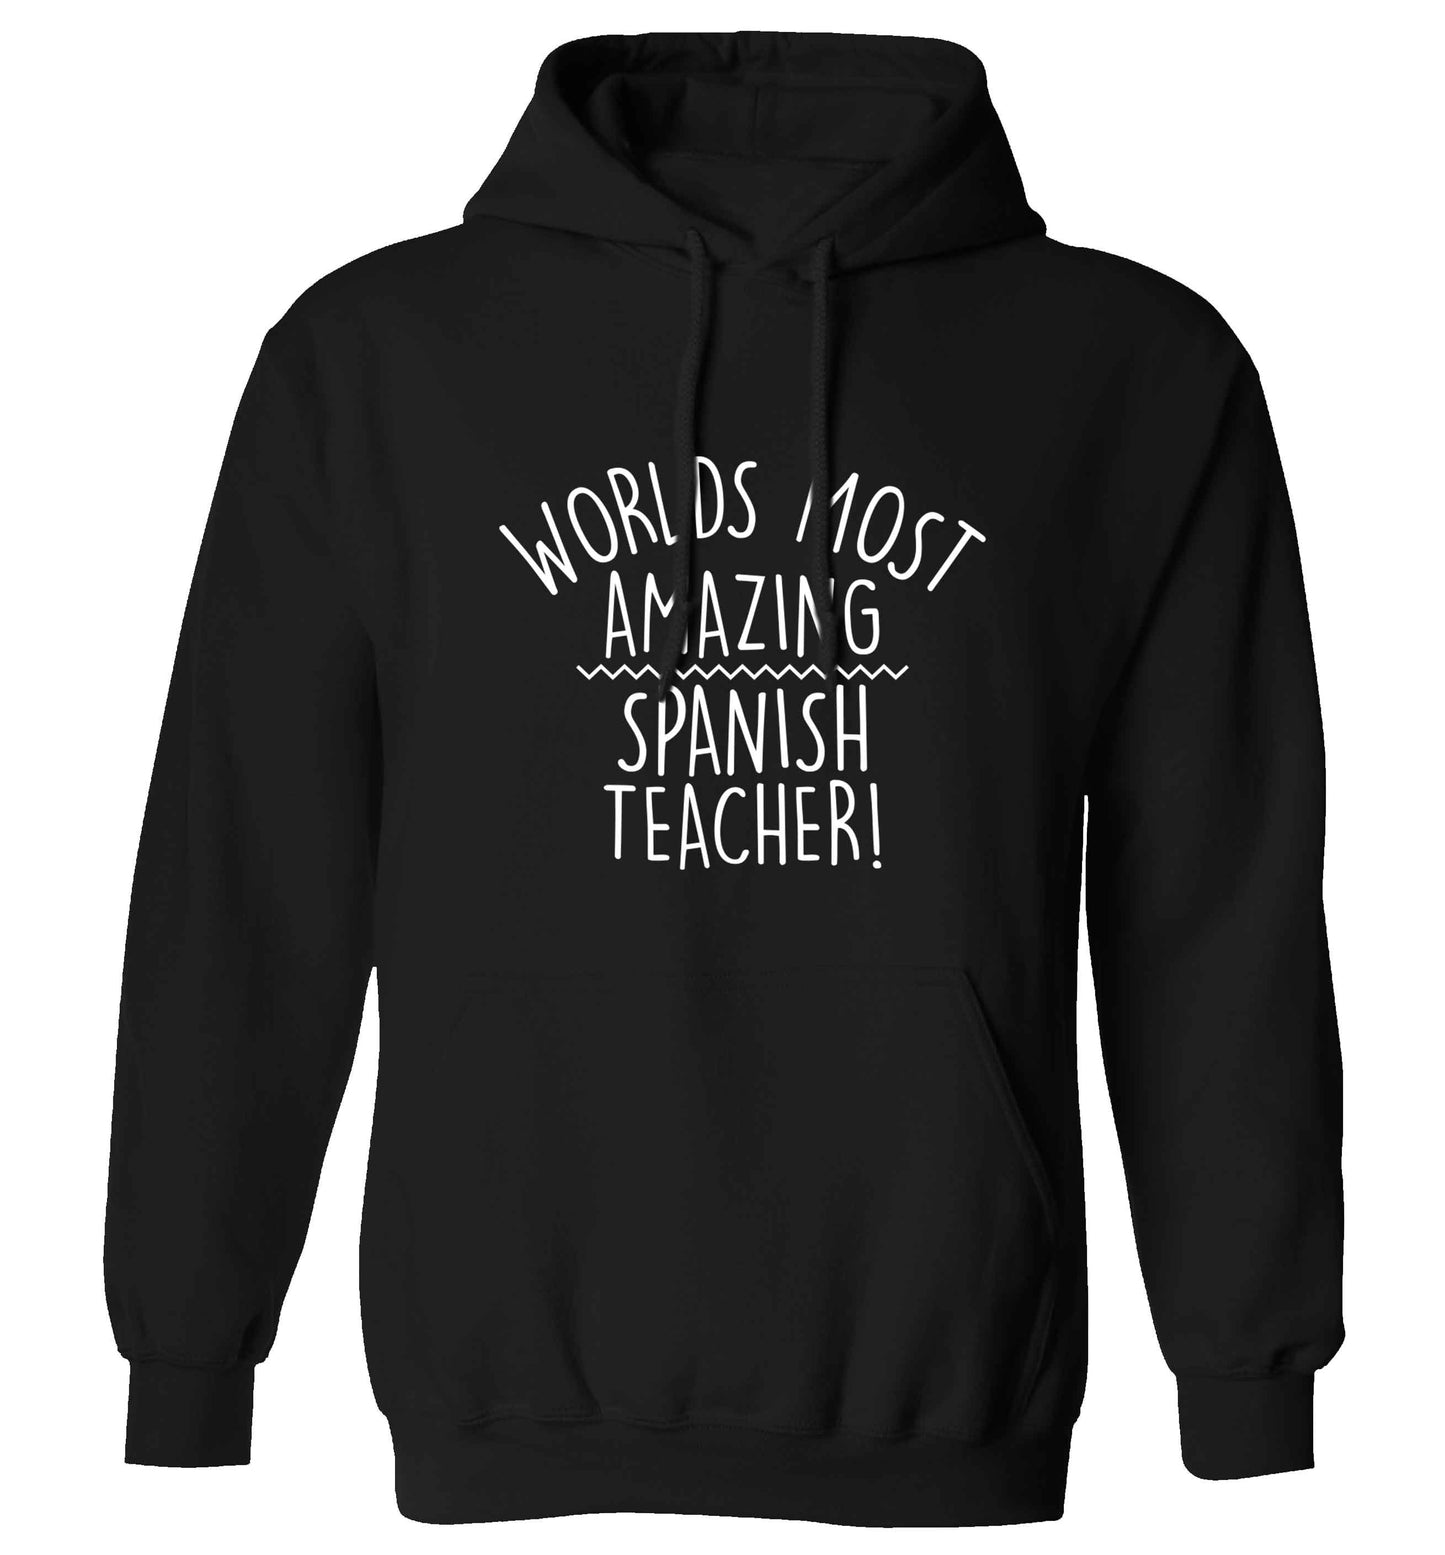 Worlds most amazing Spanish teacher adults unisex black hoodie 2XL